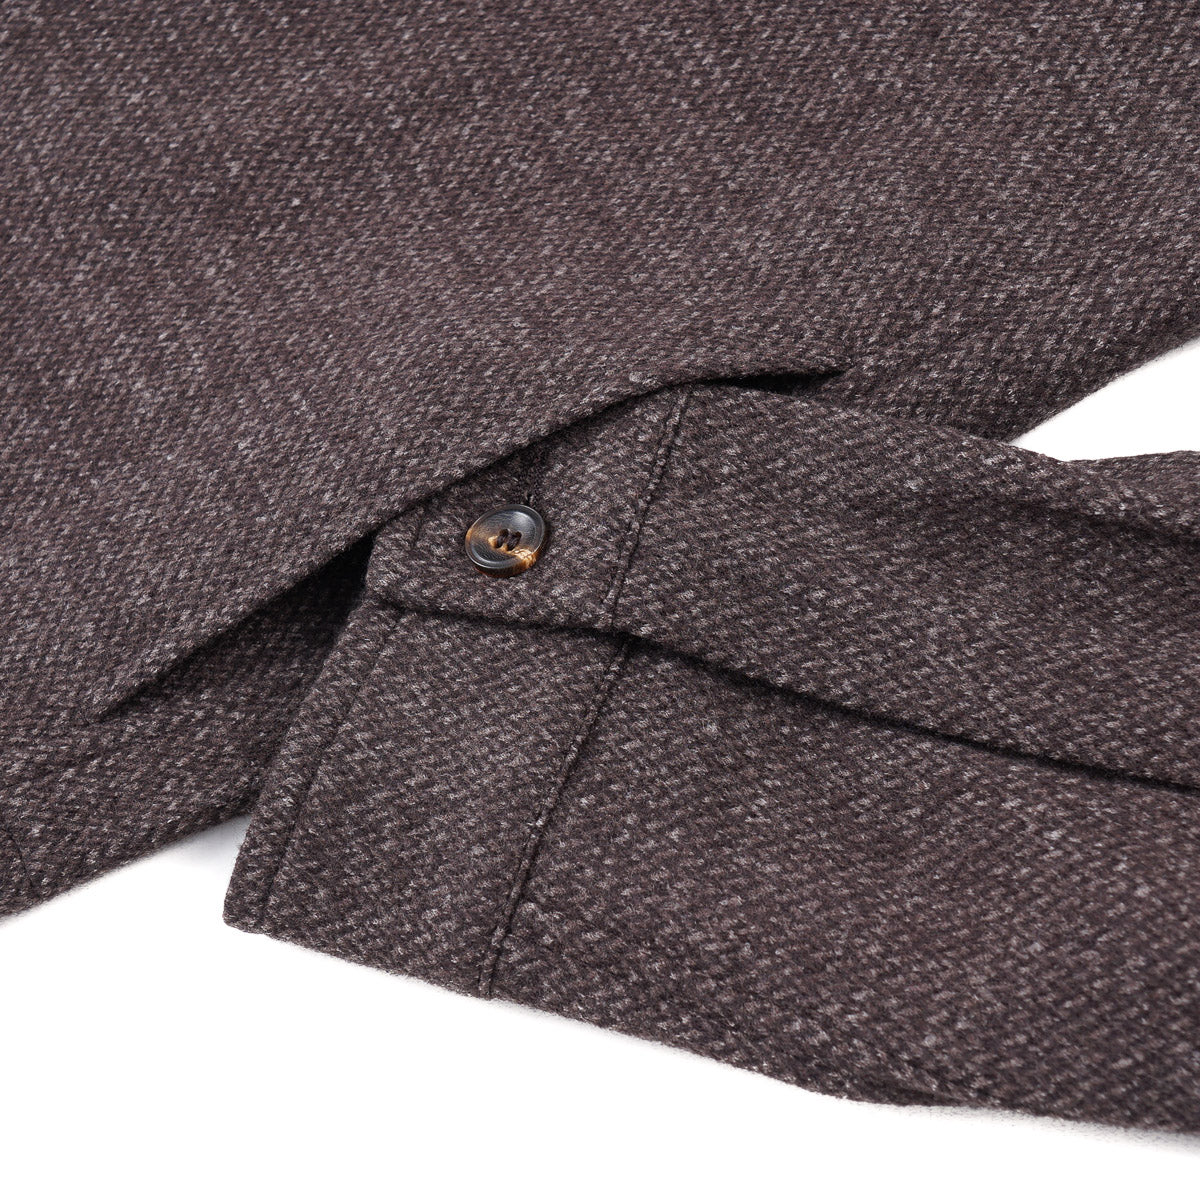 Marco Pescarolo Soft Woven Wool Jacket - Top Shelf Apparel